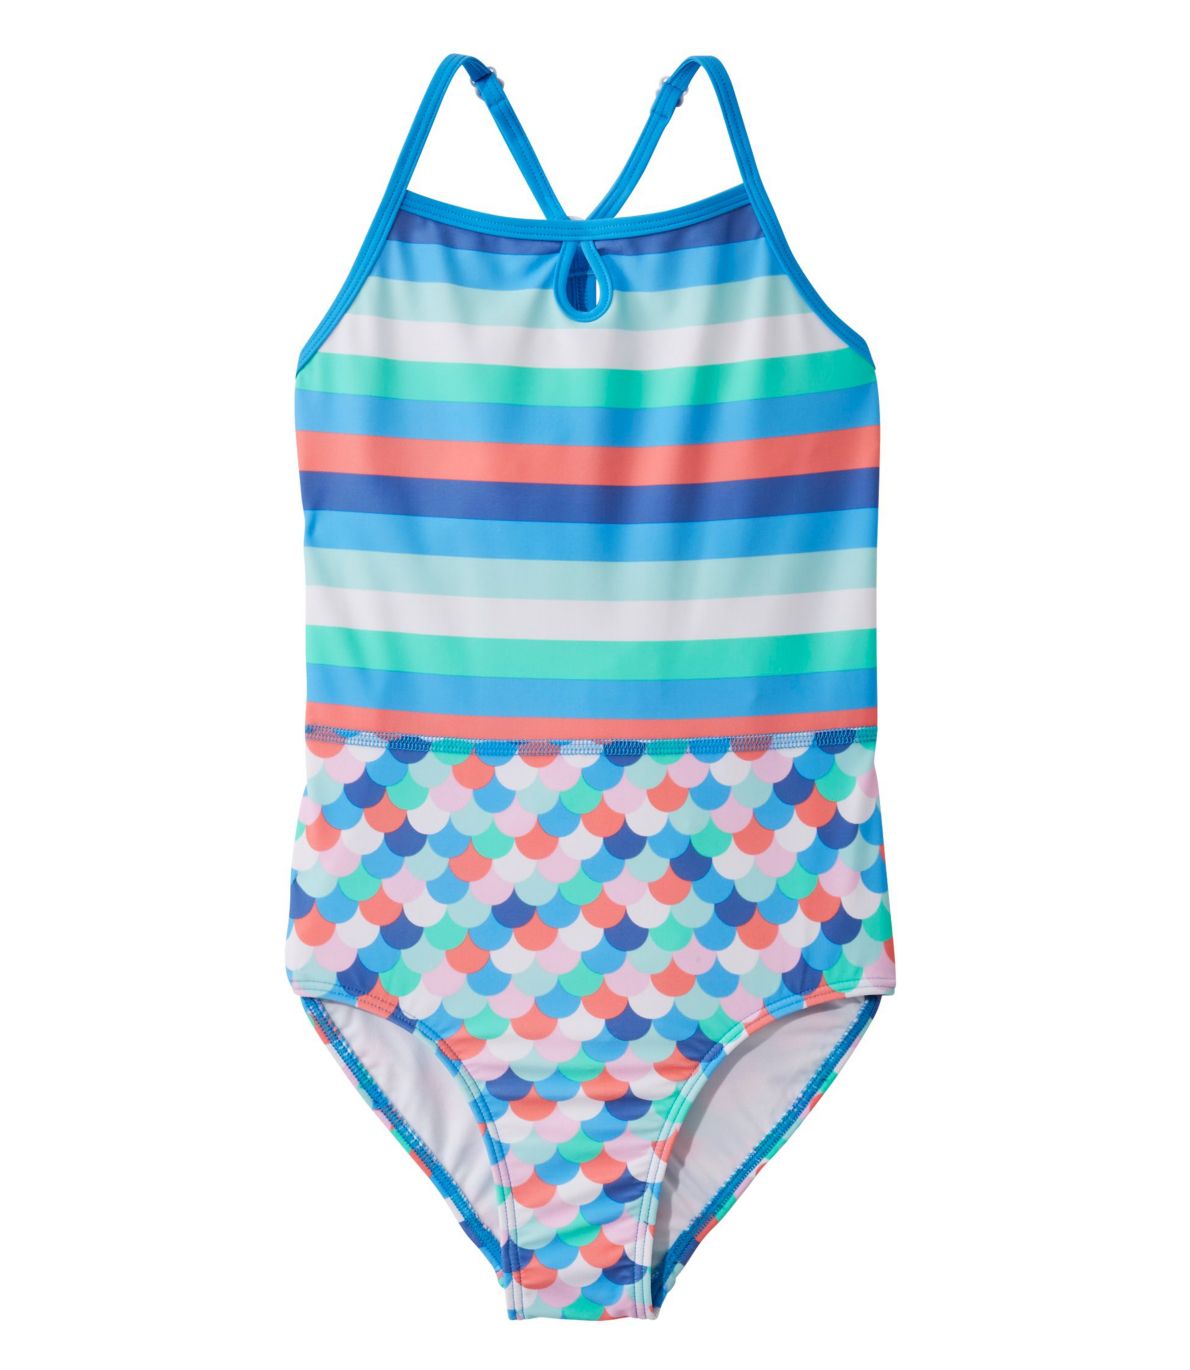 Girls' BeanSport Swimsuit, One-Piece, Print